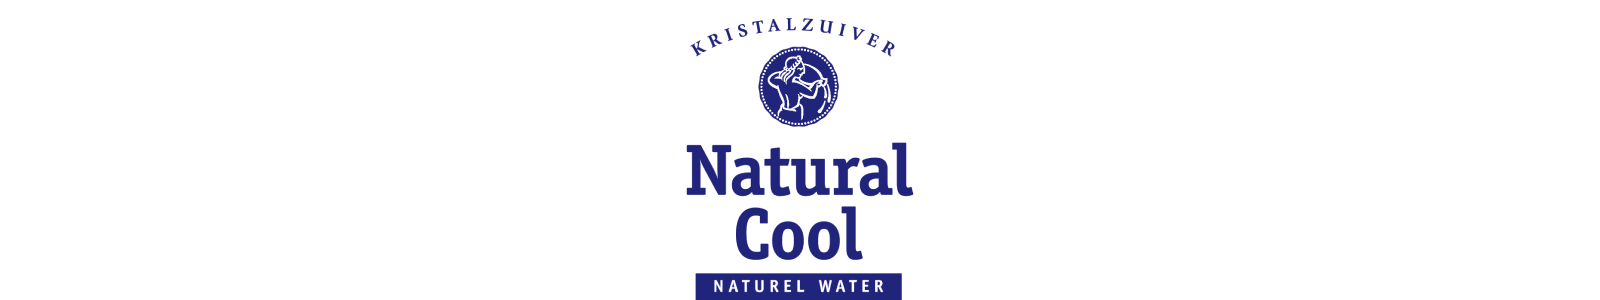 Banner natural cool